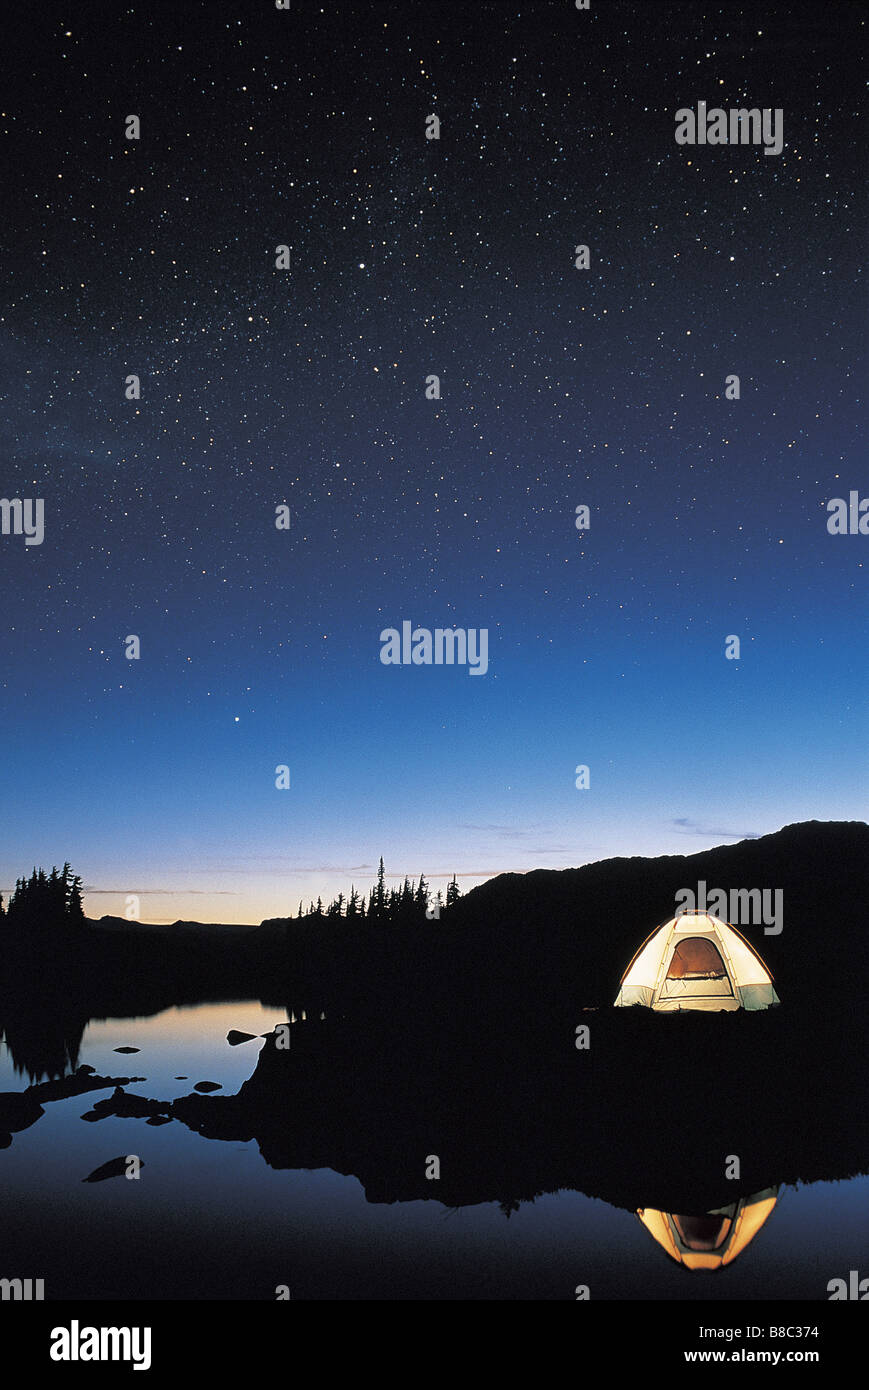 FL5442, David Nunuk; Beleuchteten Zelt Nacht unter Sternenhimmel Stockfoto